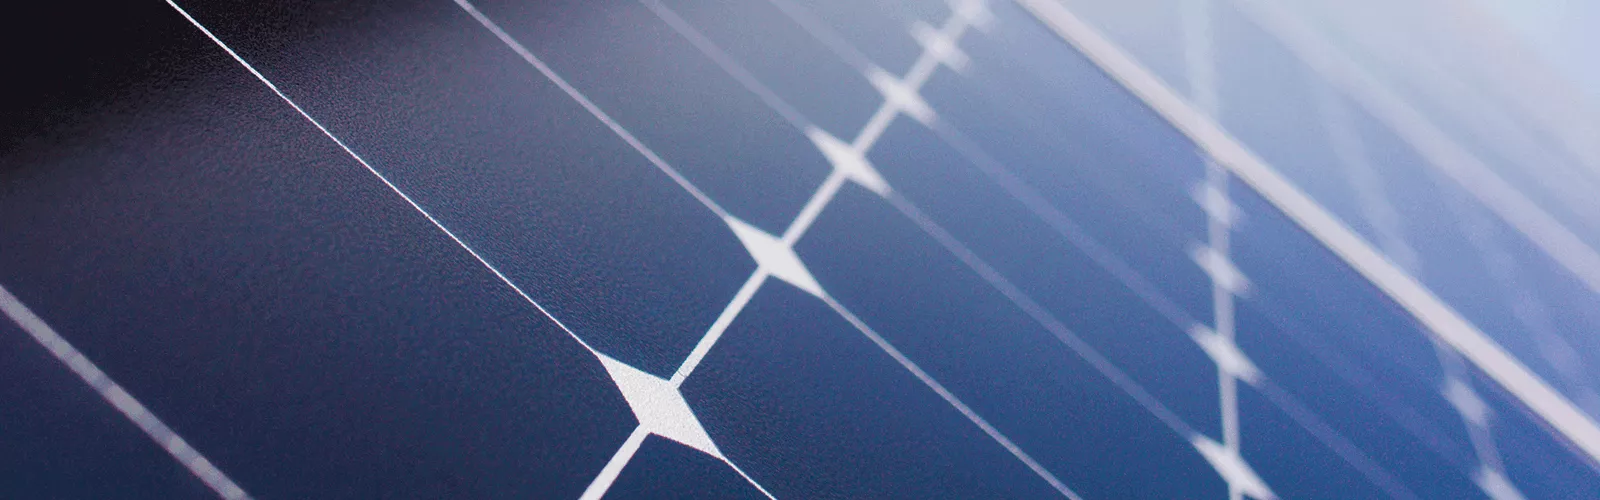 SunPower Solar Panels with Maxeon Cells